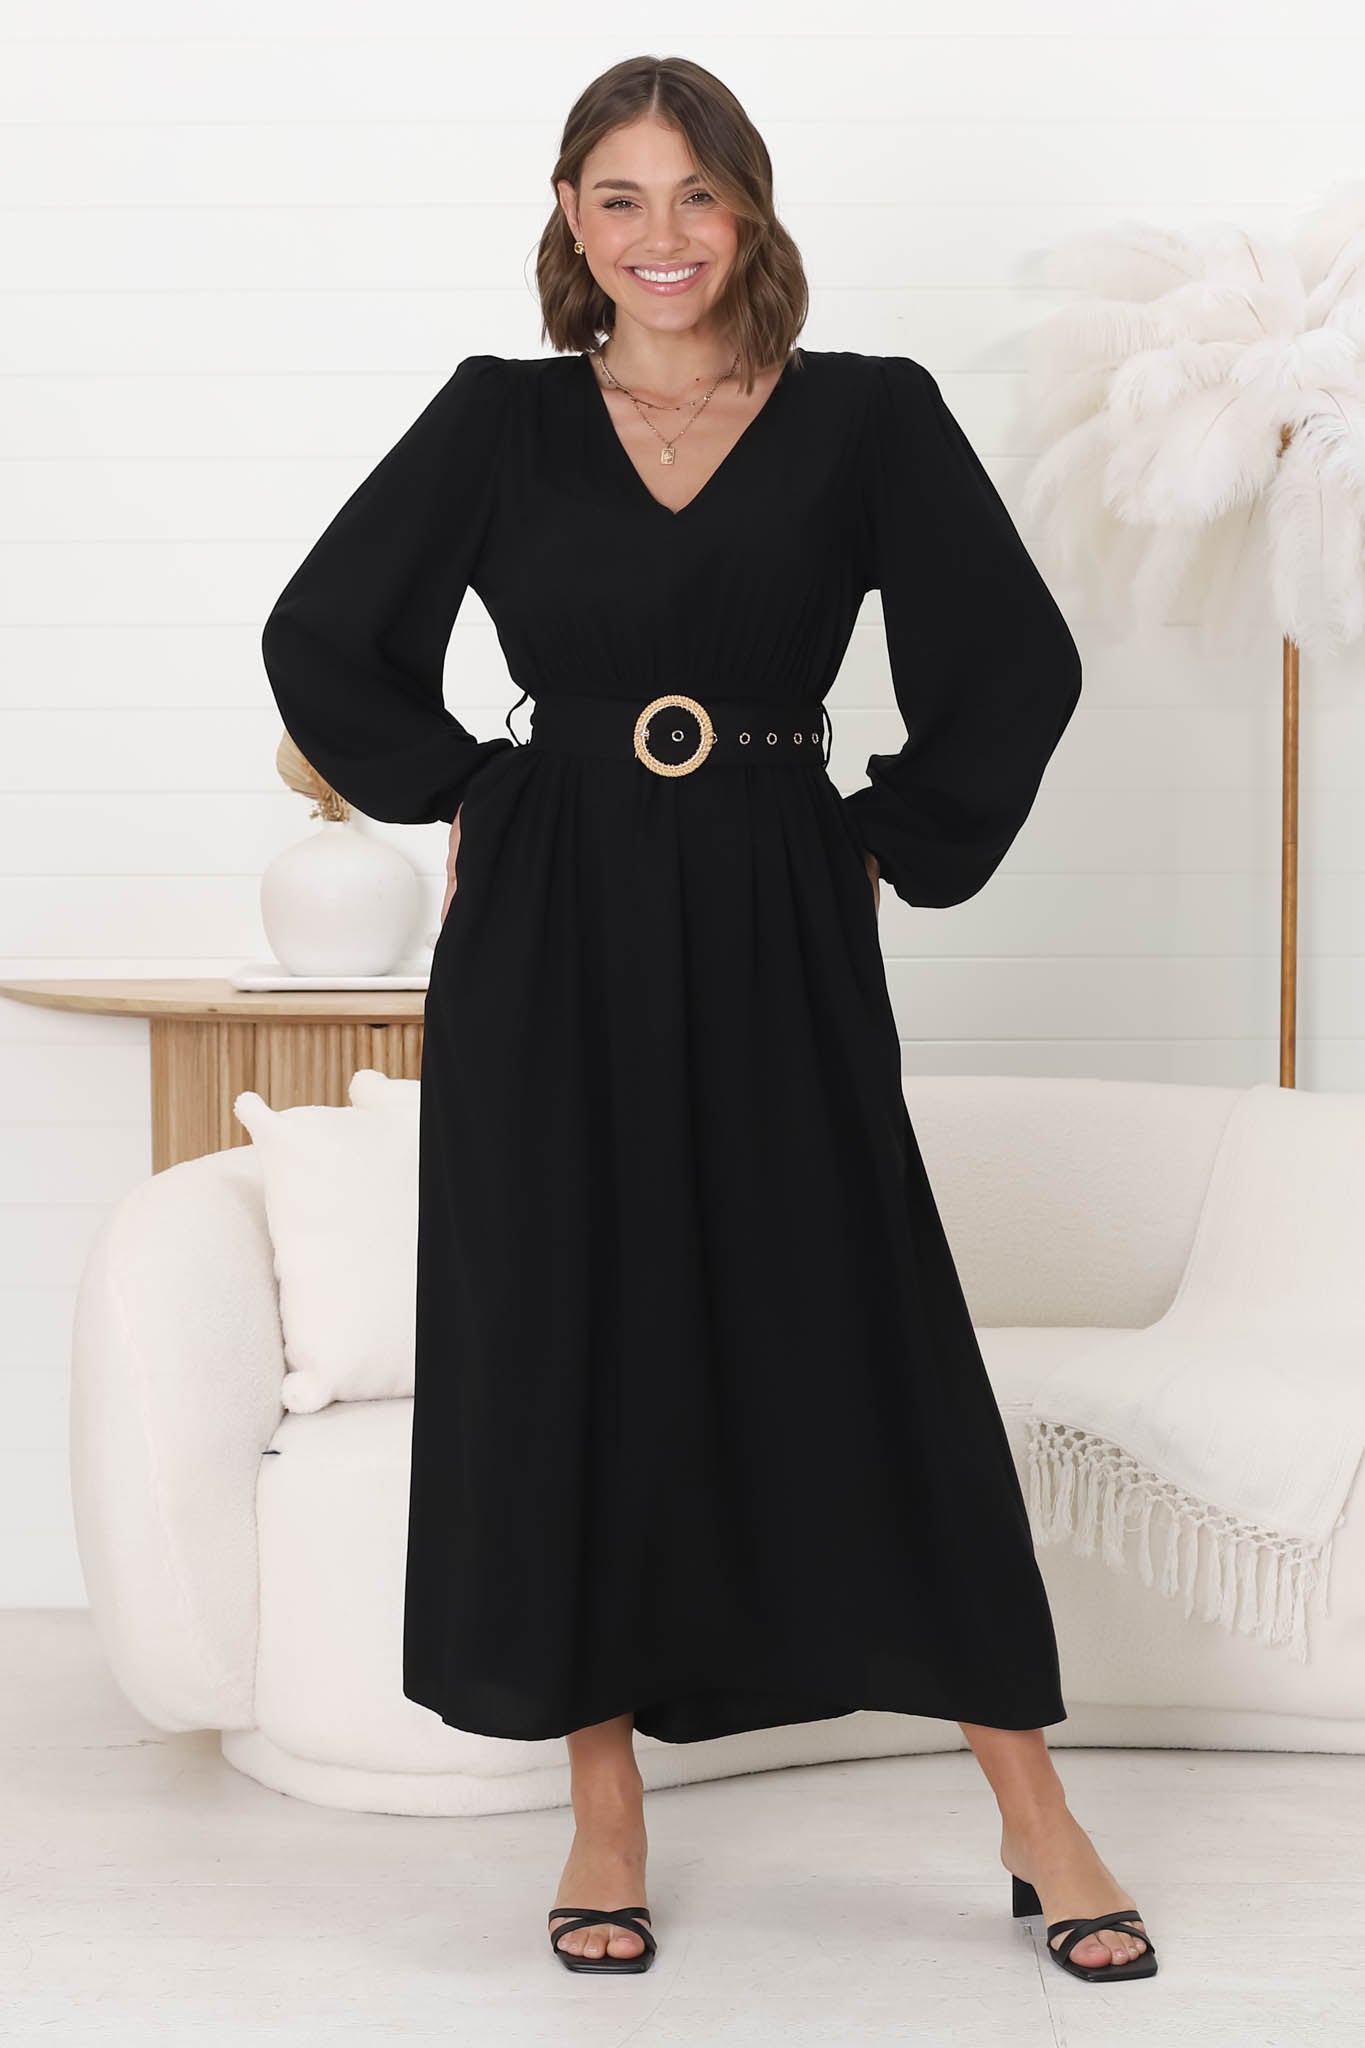 Lyna Midi Dress - A-Line Dress with Statement Rattan Buckle Belt in Black